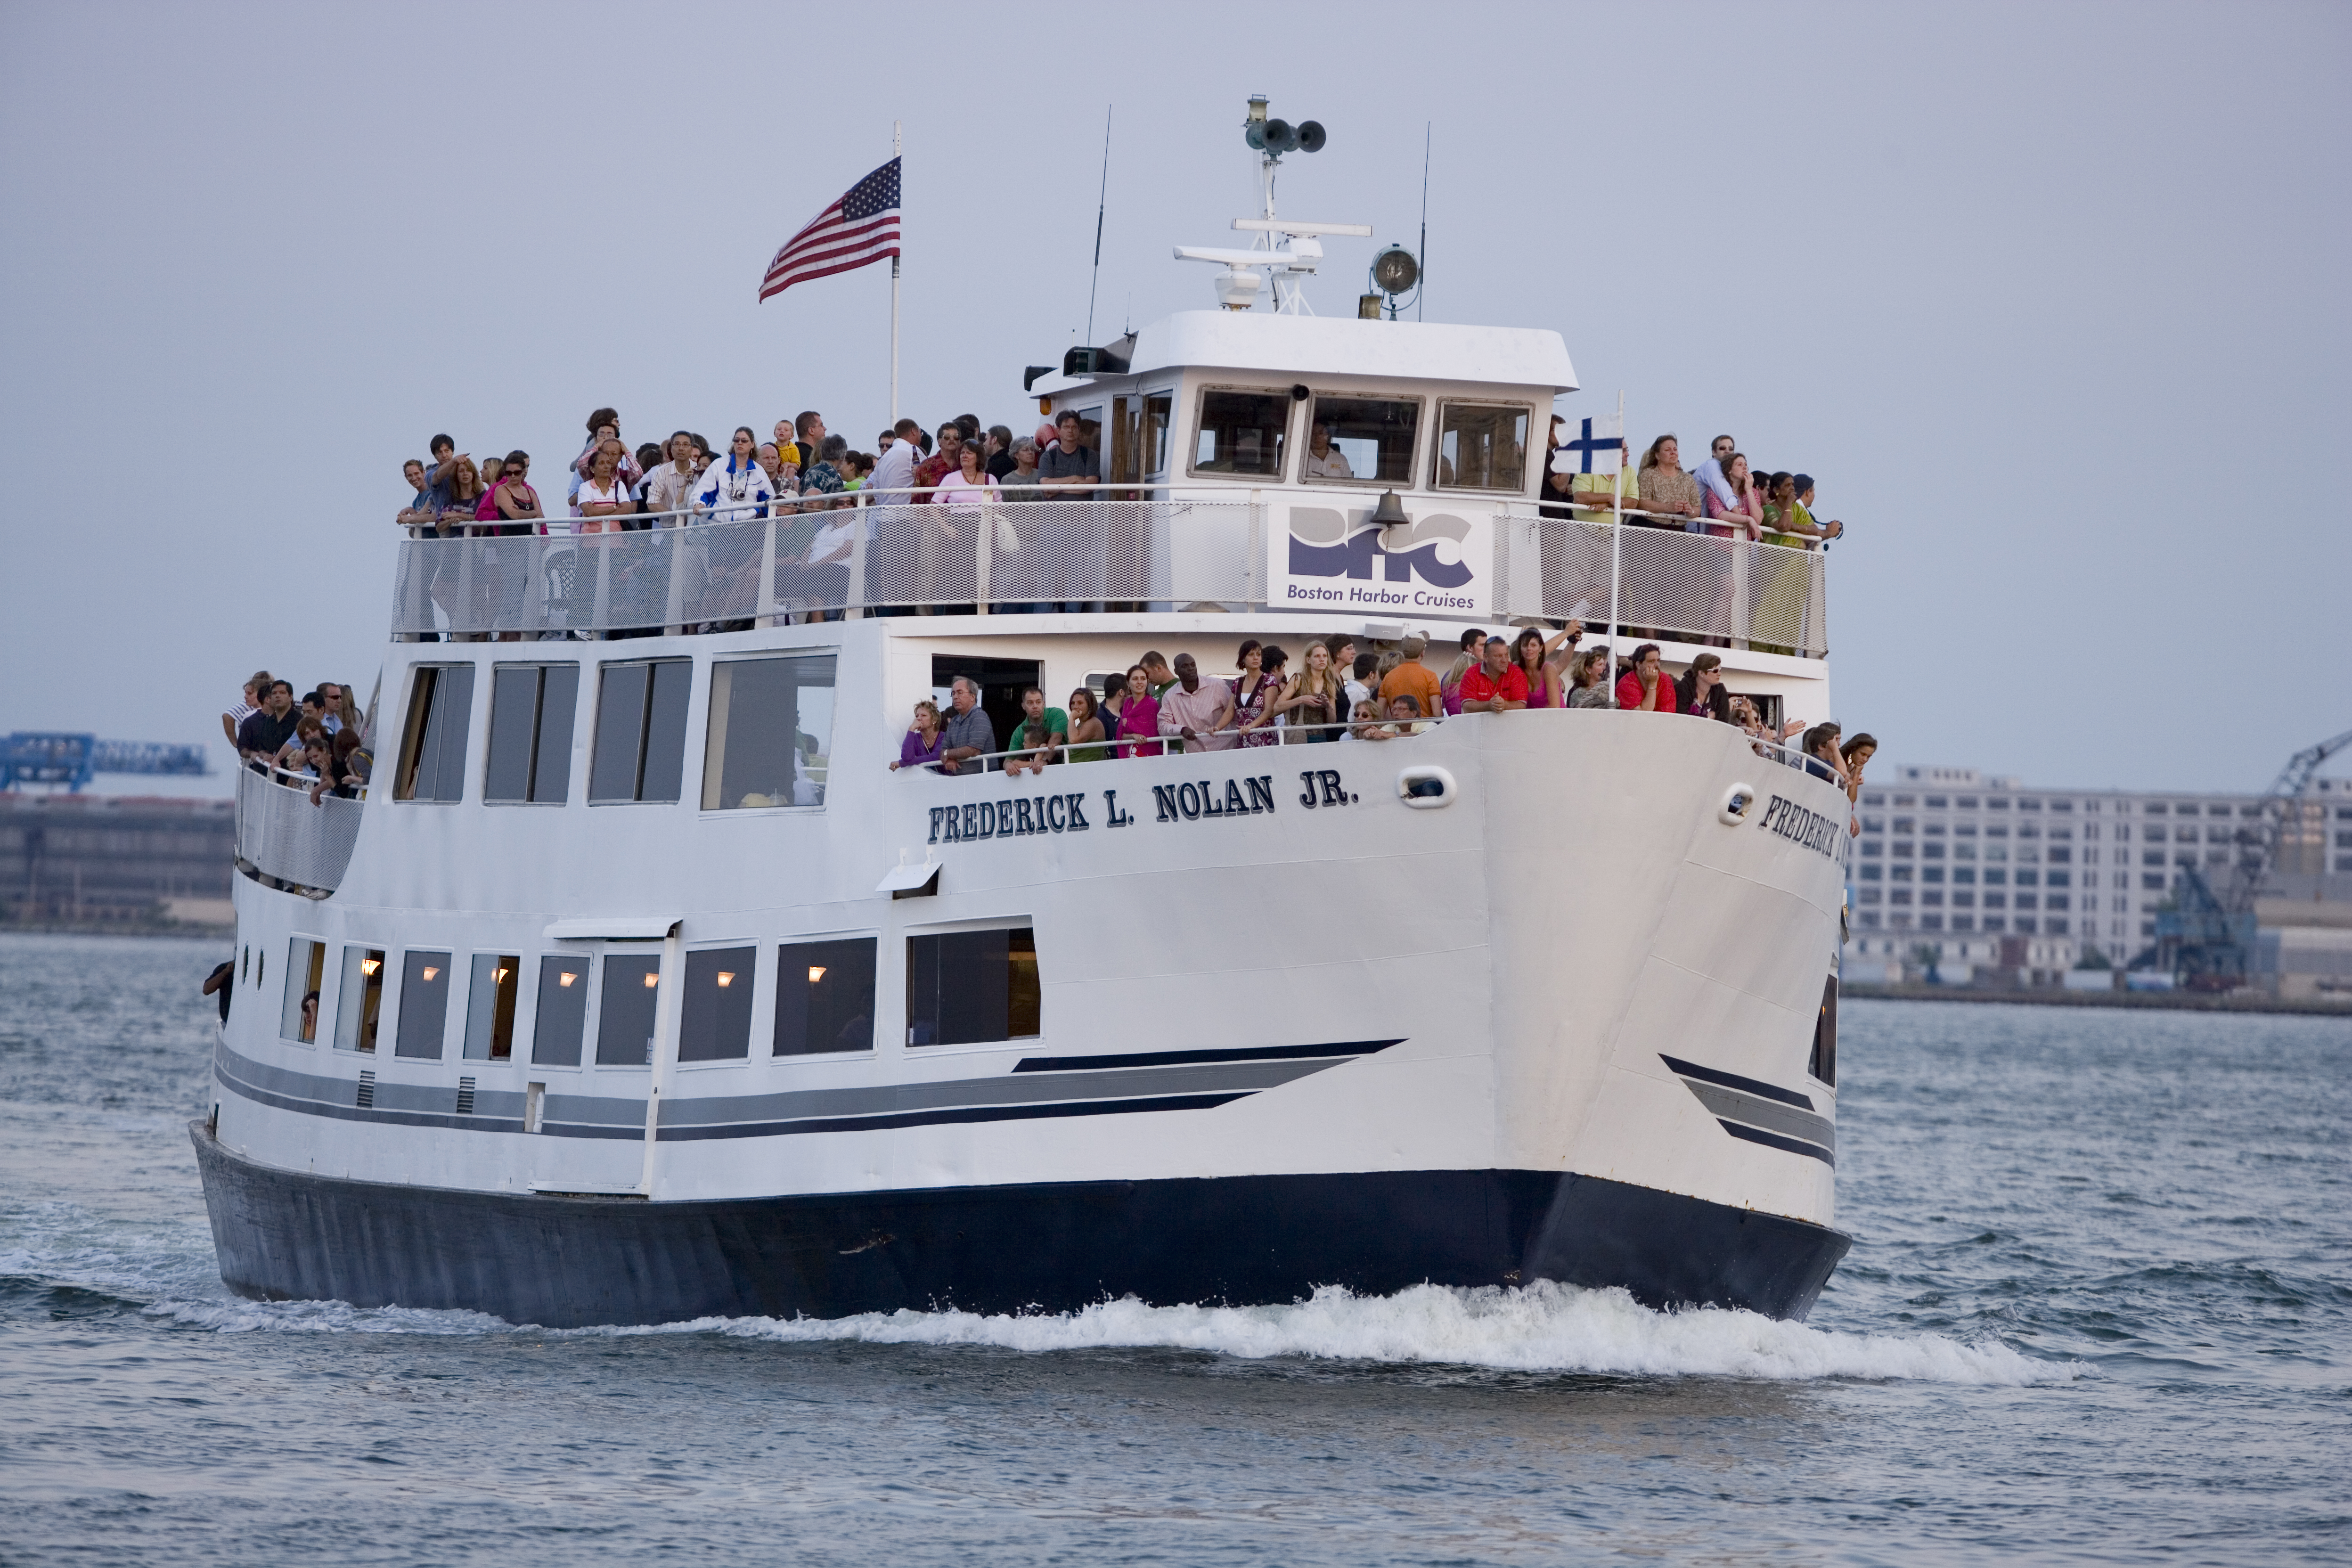 https://res.cloudinary.com/see-sight-tours/image/upload/v1581436282/boston-harbor-cruise-boat.jpg